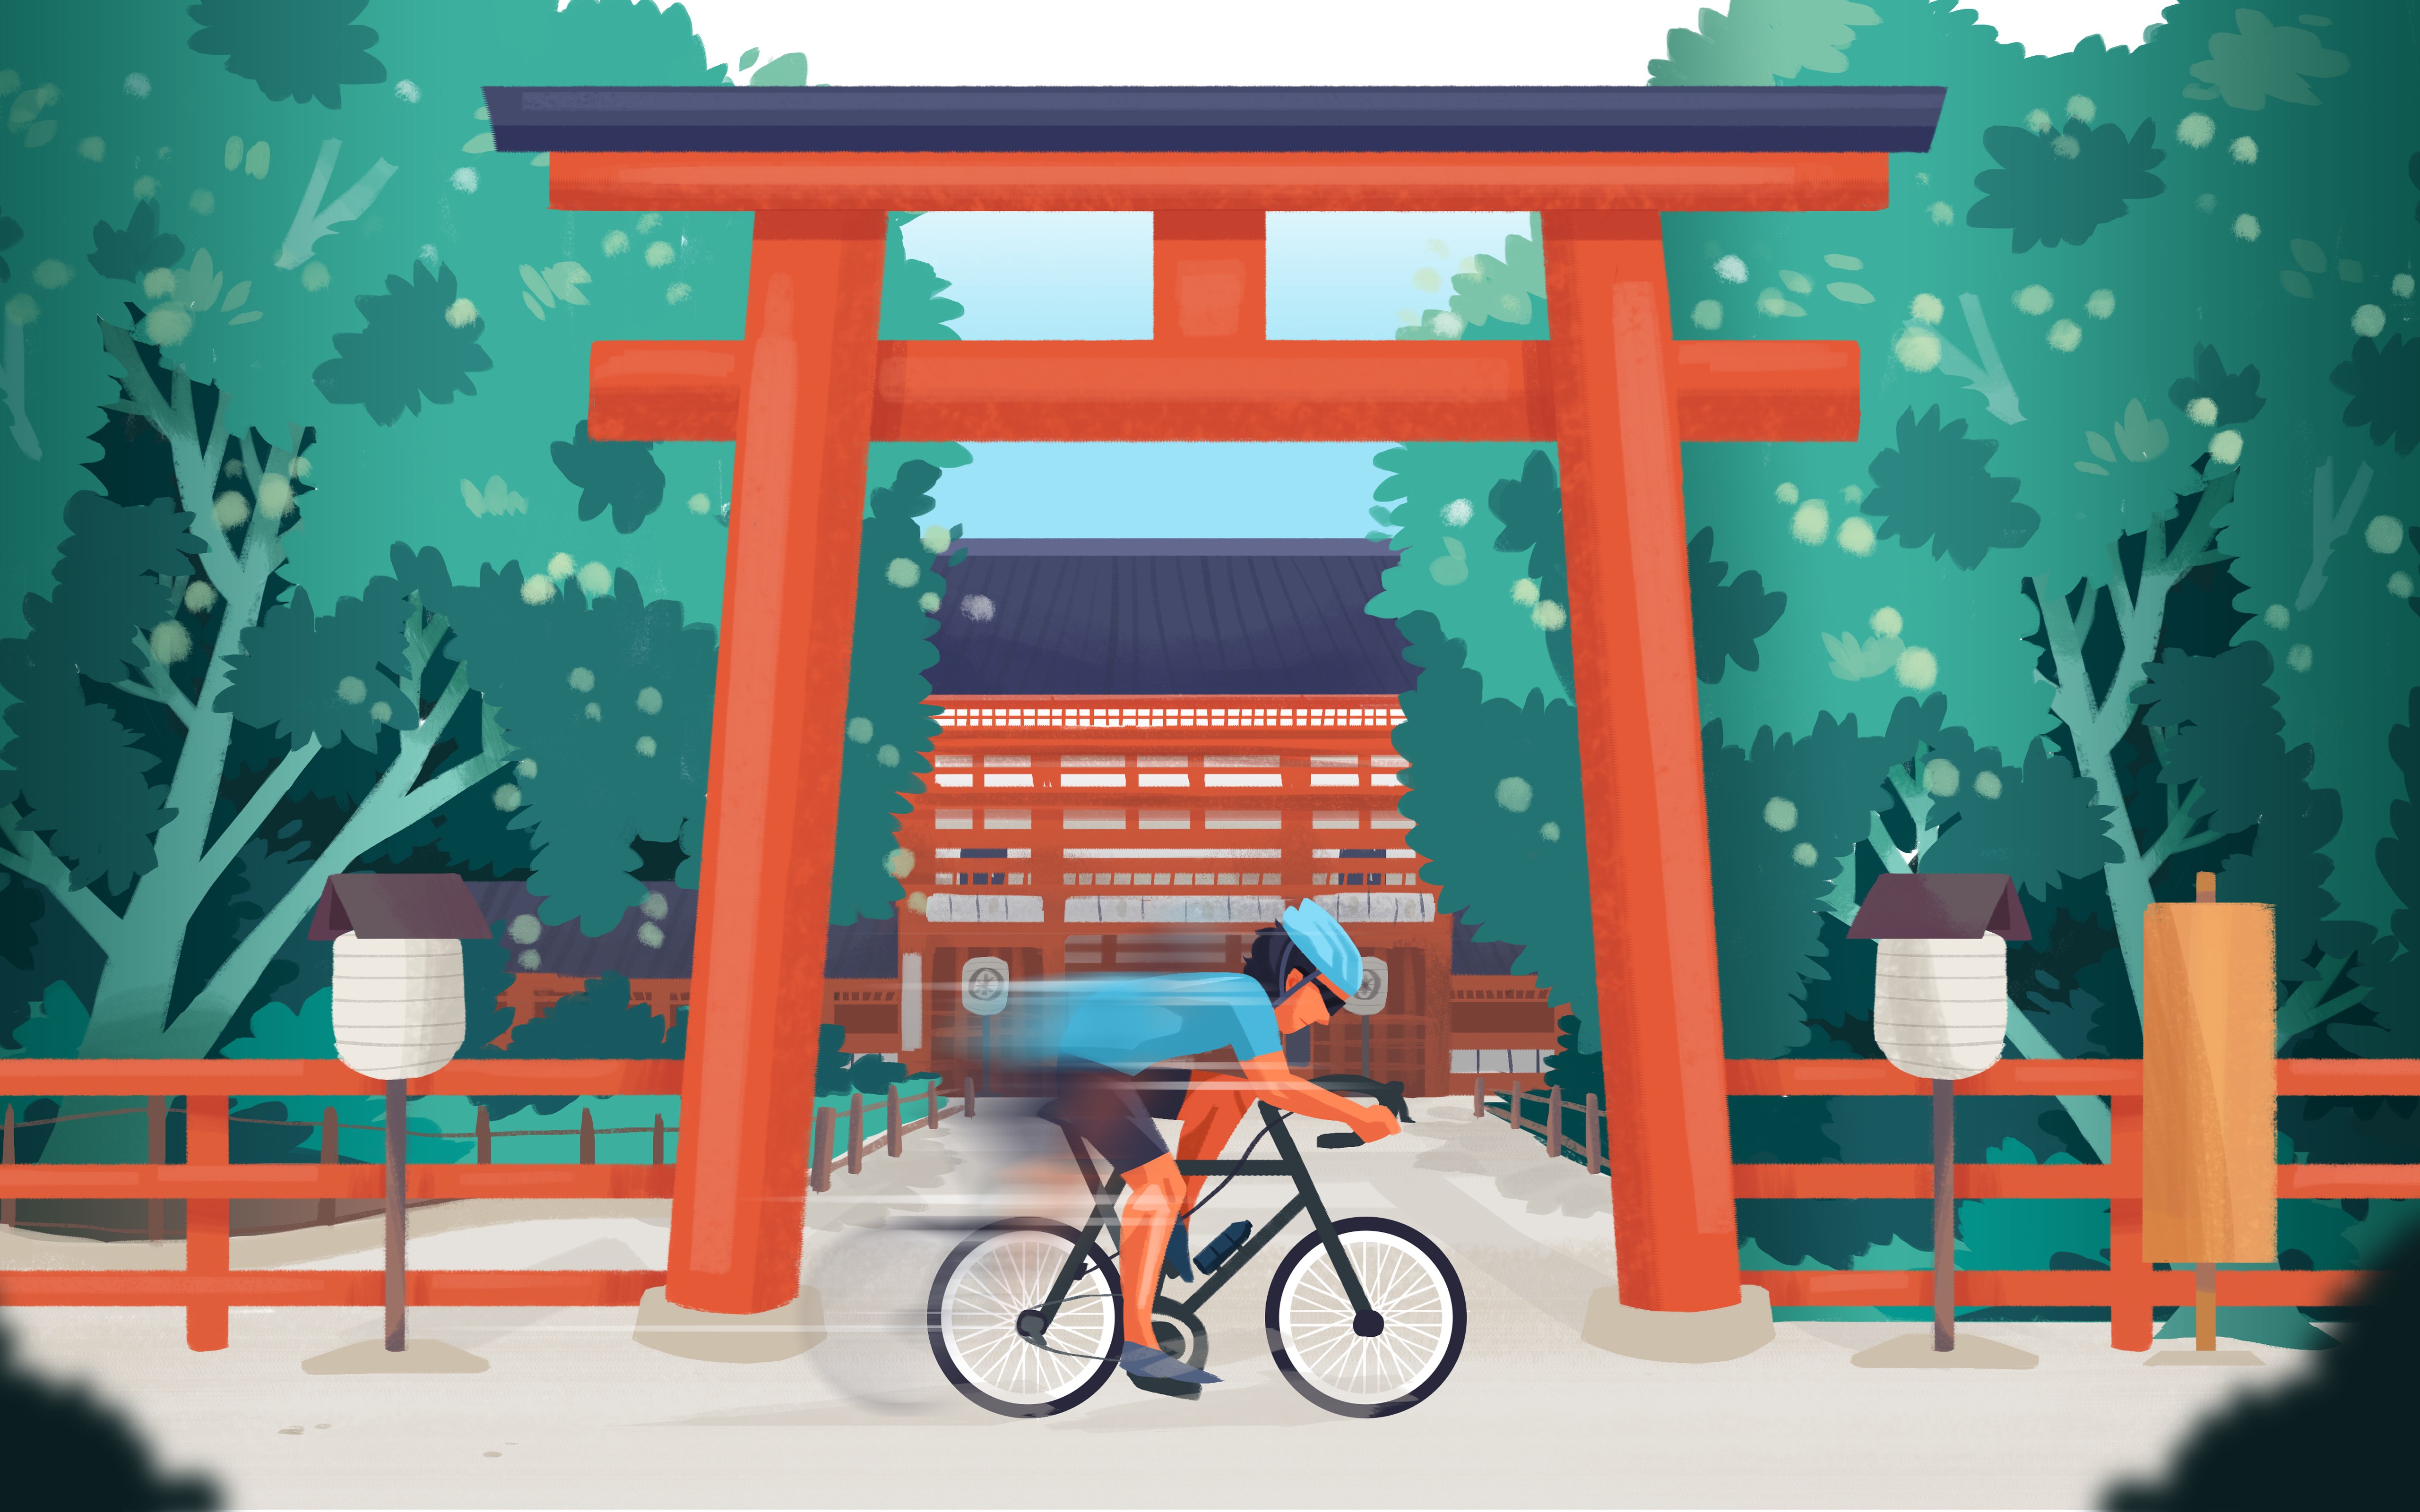 Japanese cycle